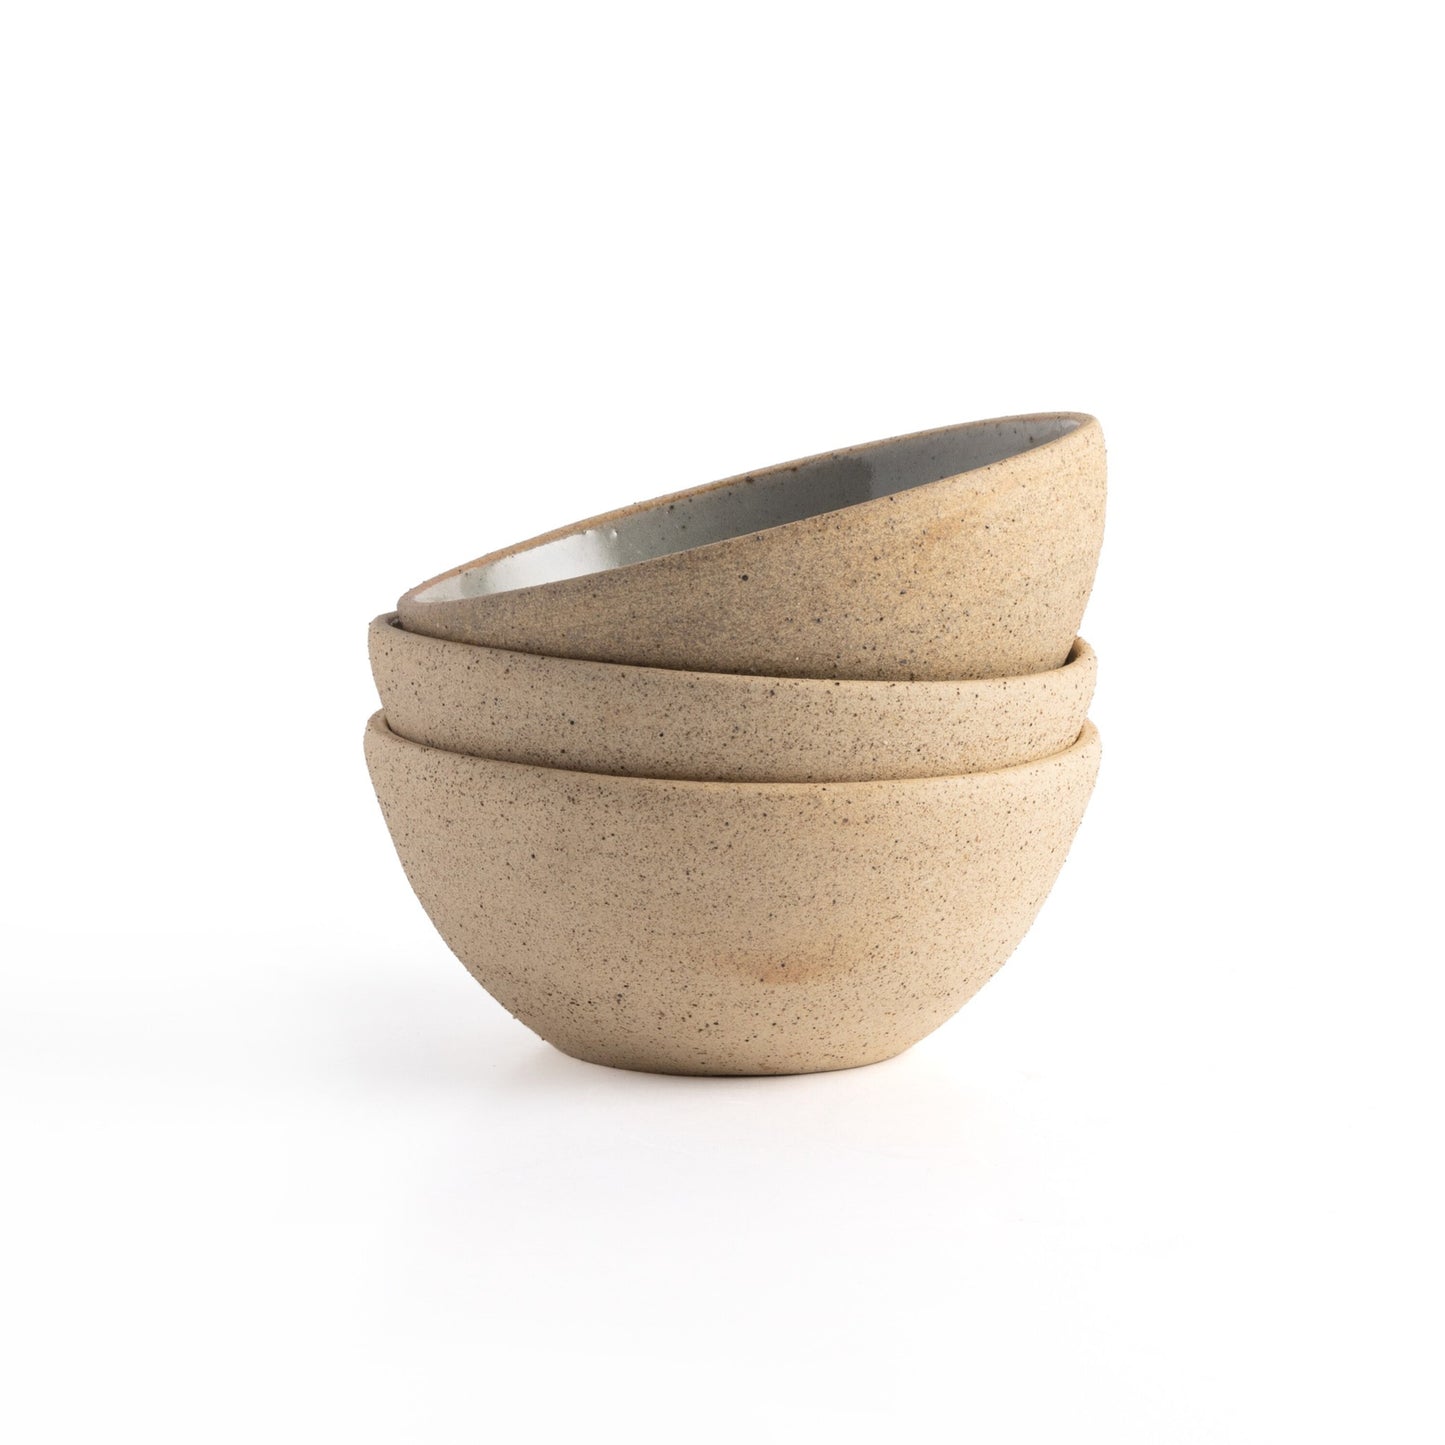 Nelo small bowl, set of 4-natural clay